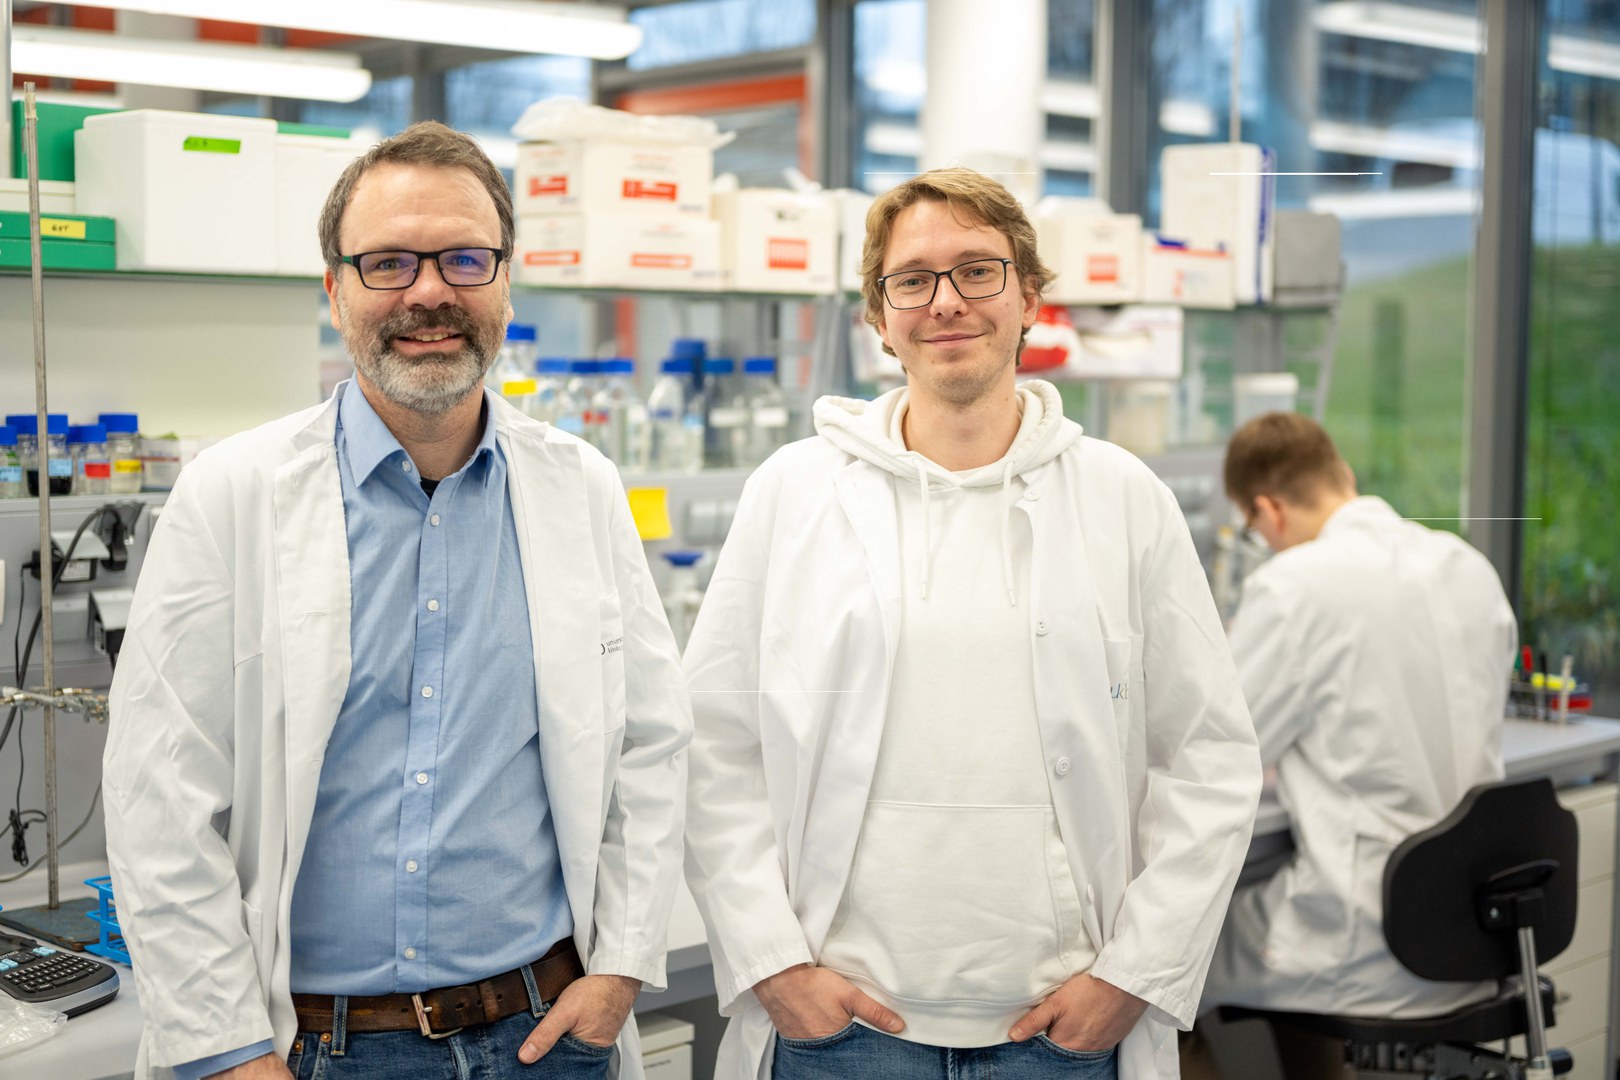 Researchers from the University Hospital Bonn and the University of Bonn